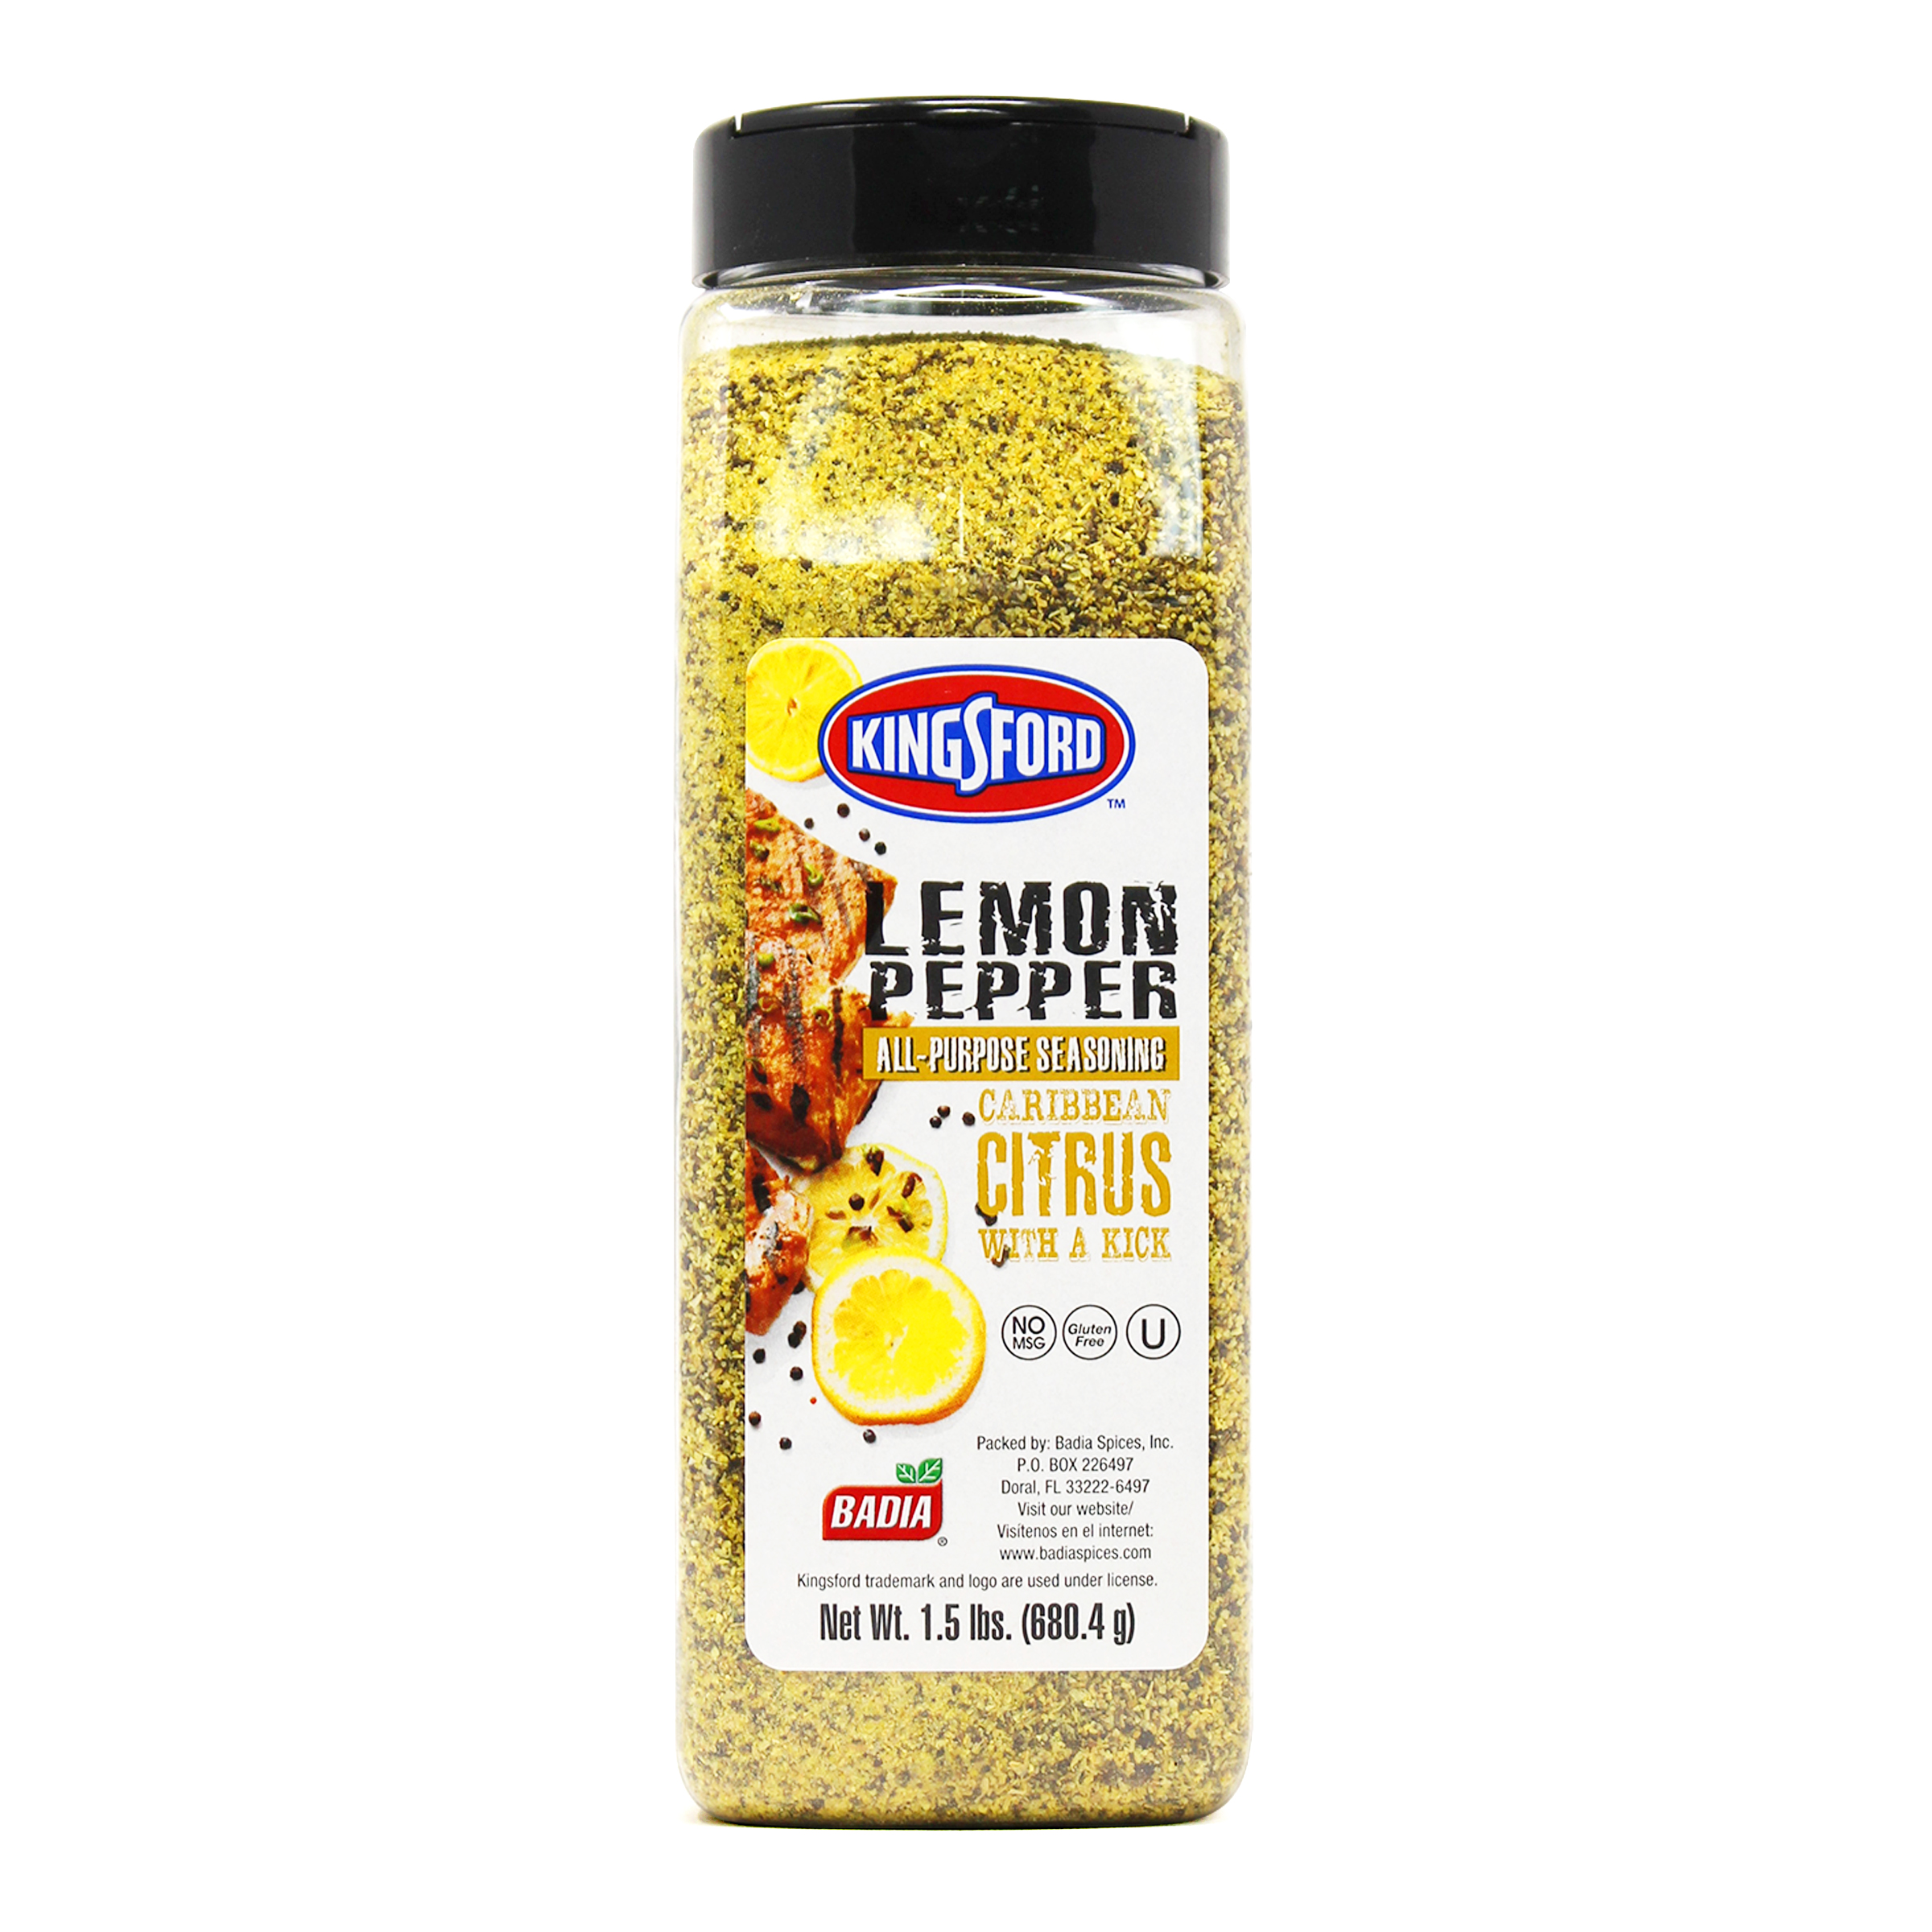 Mo'Spices Low Sodium Lemon Pepper Seasoning - Mo'Spices & Seasonings